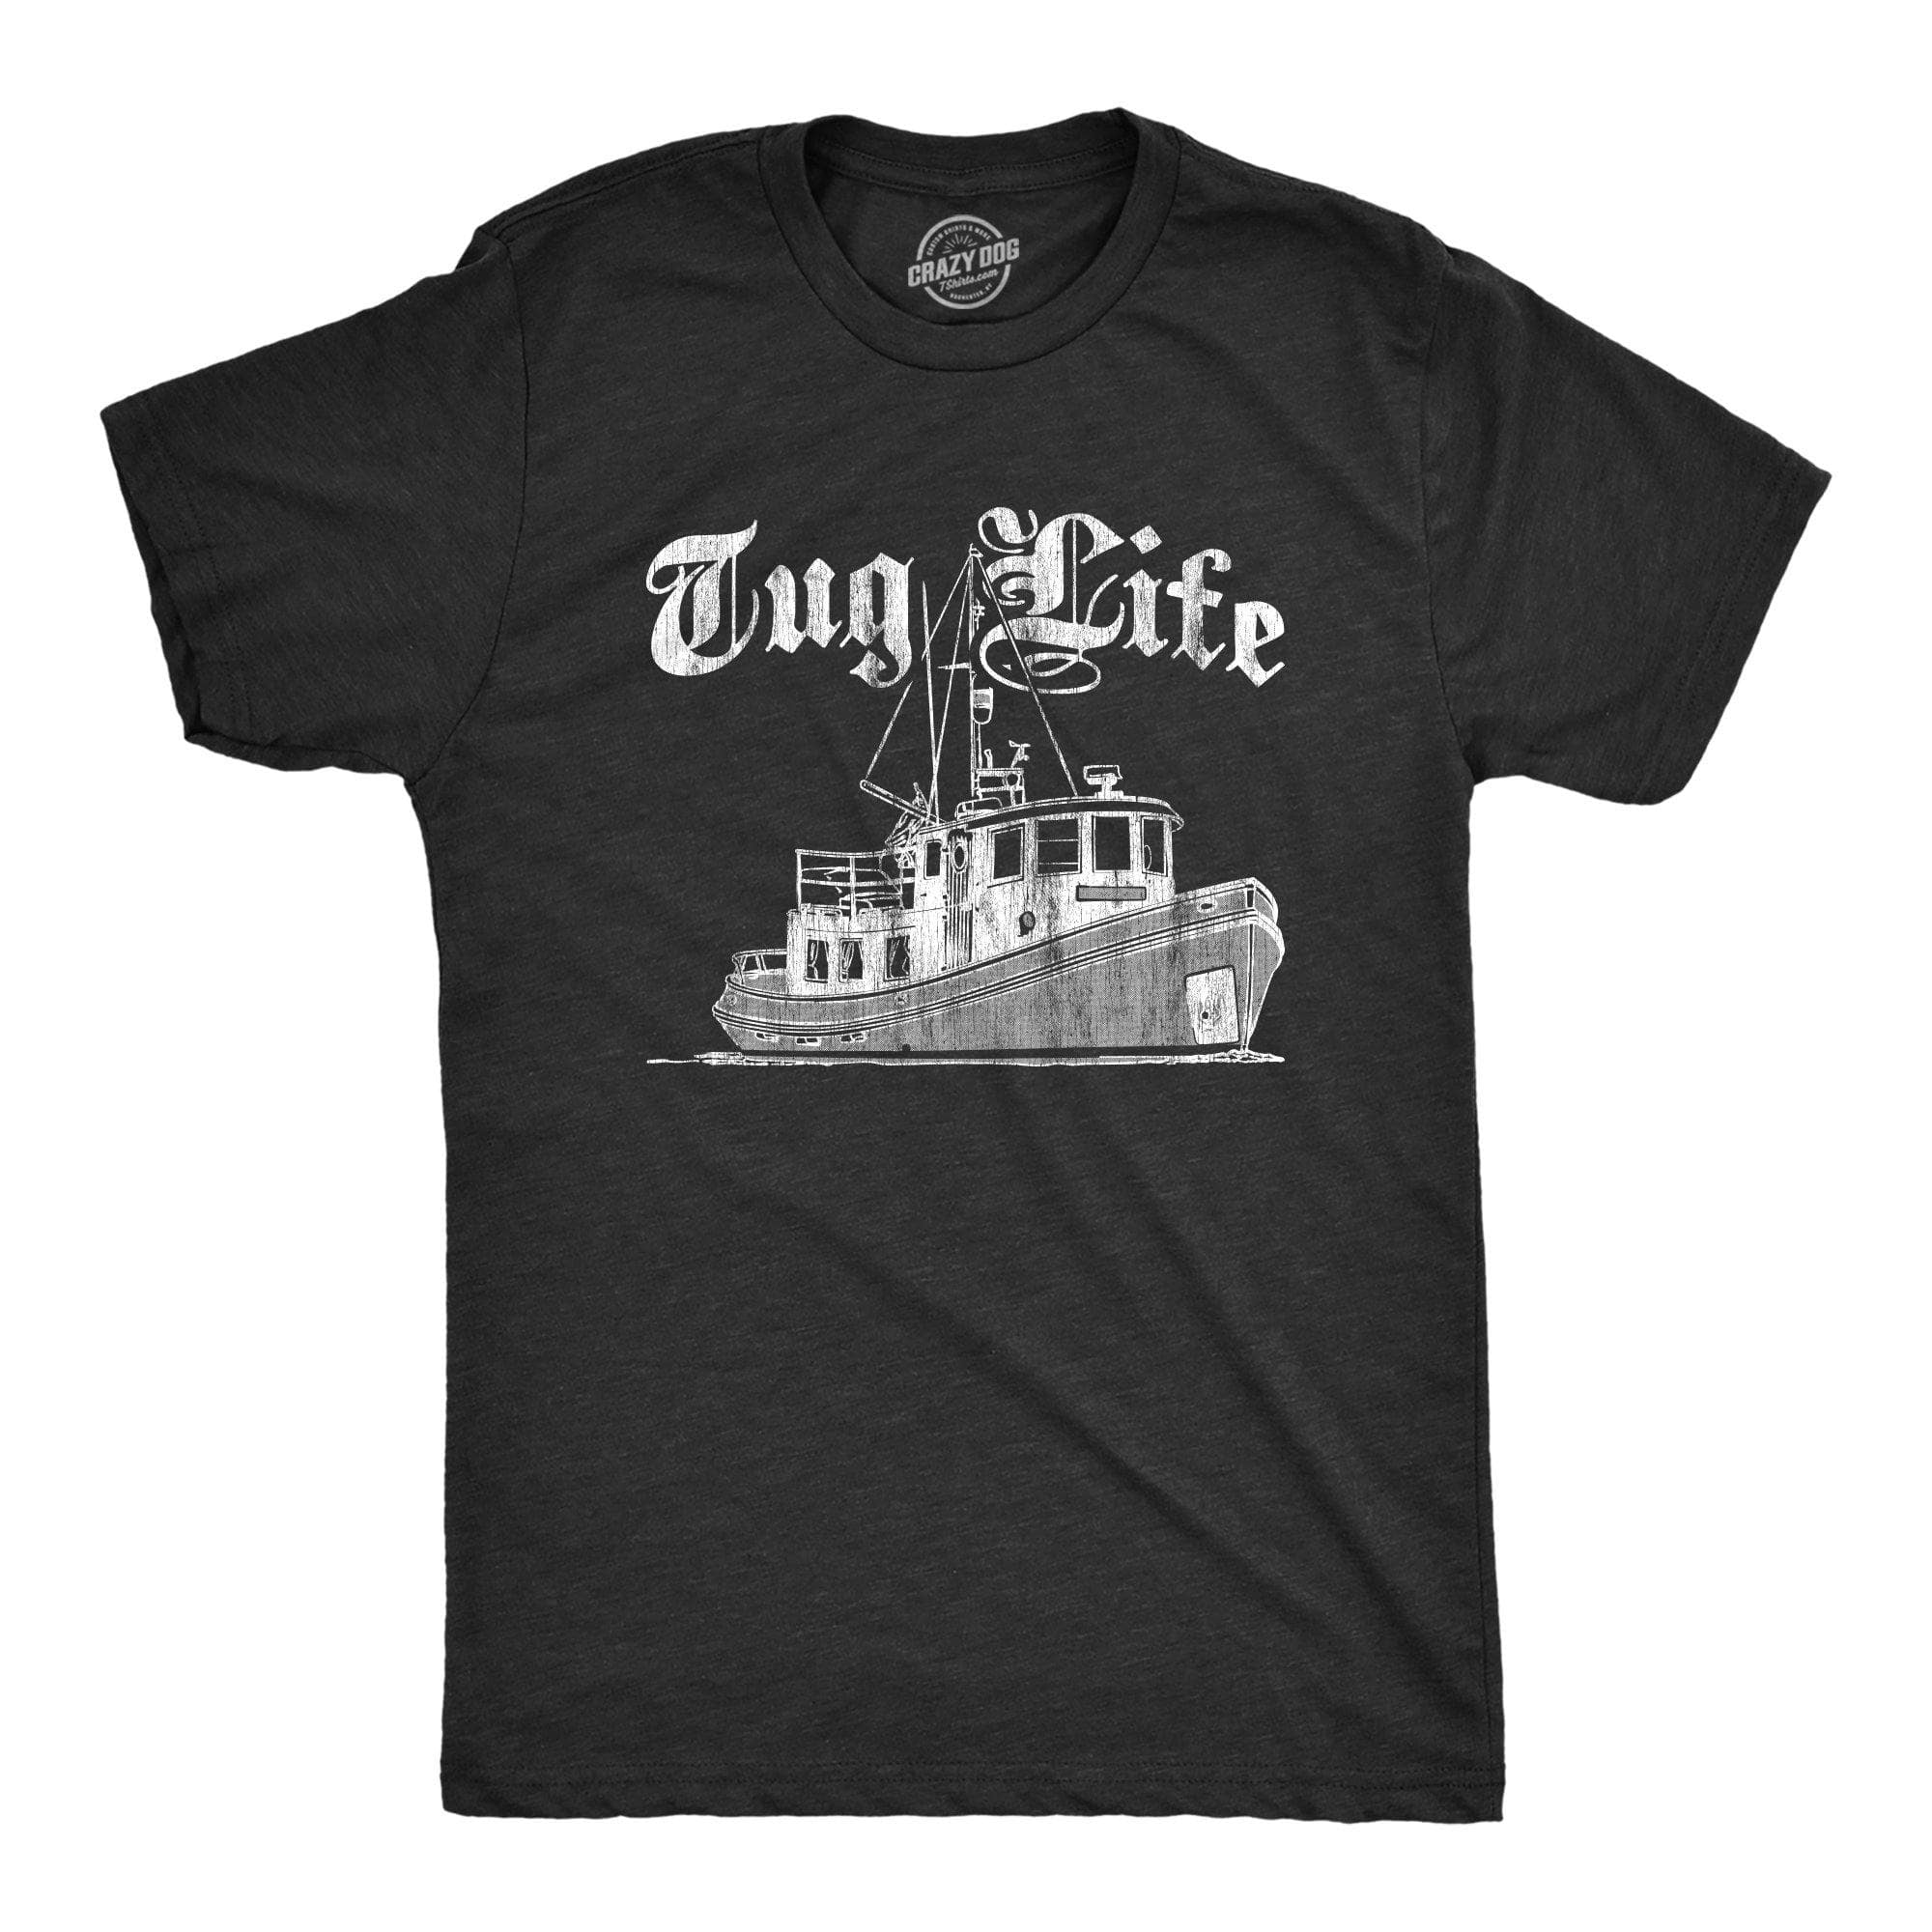 Tug Life Men's Tshirt - Crazy Dog T-Shirts